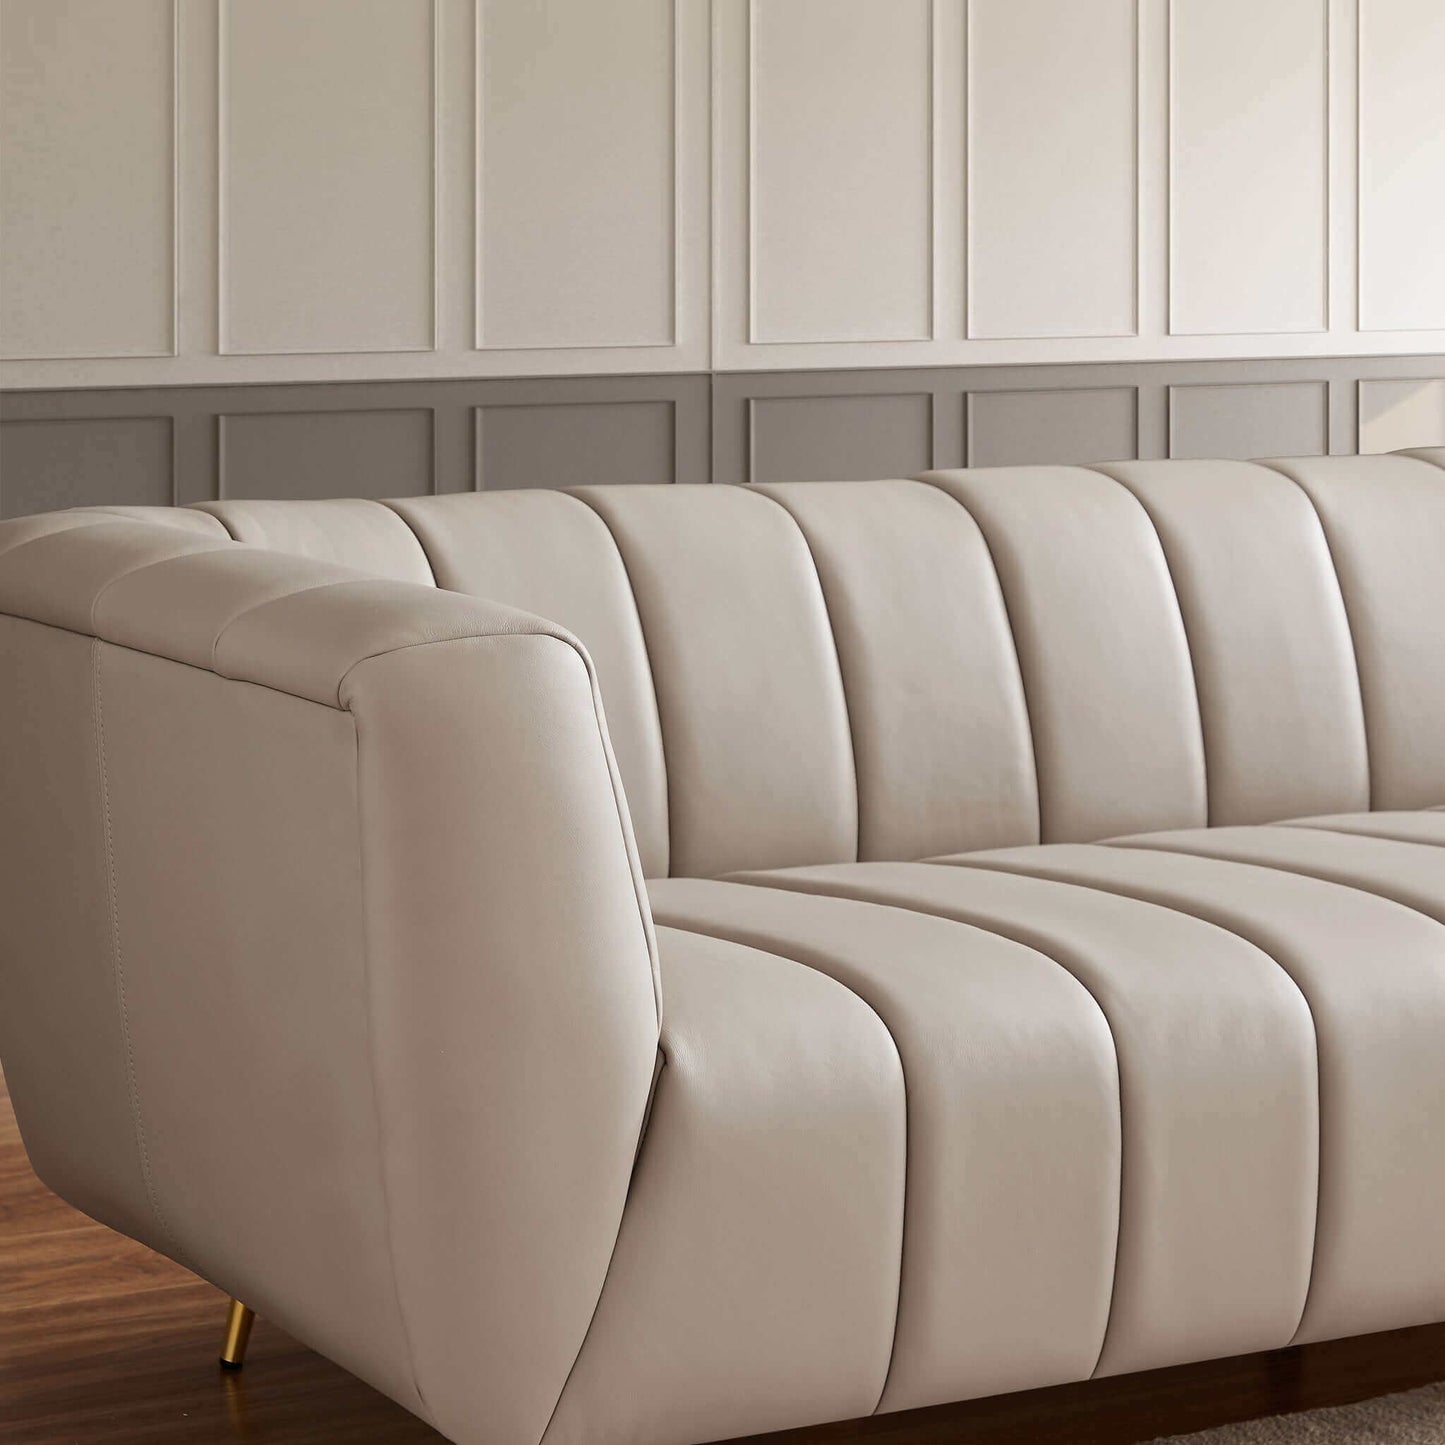 LaMattina Genuine Italian Grey Leather Channel Tufted Sofa